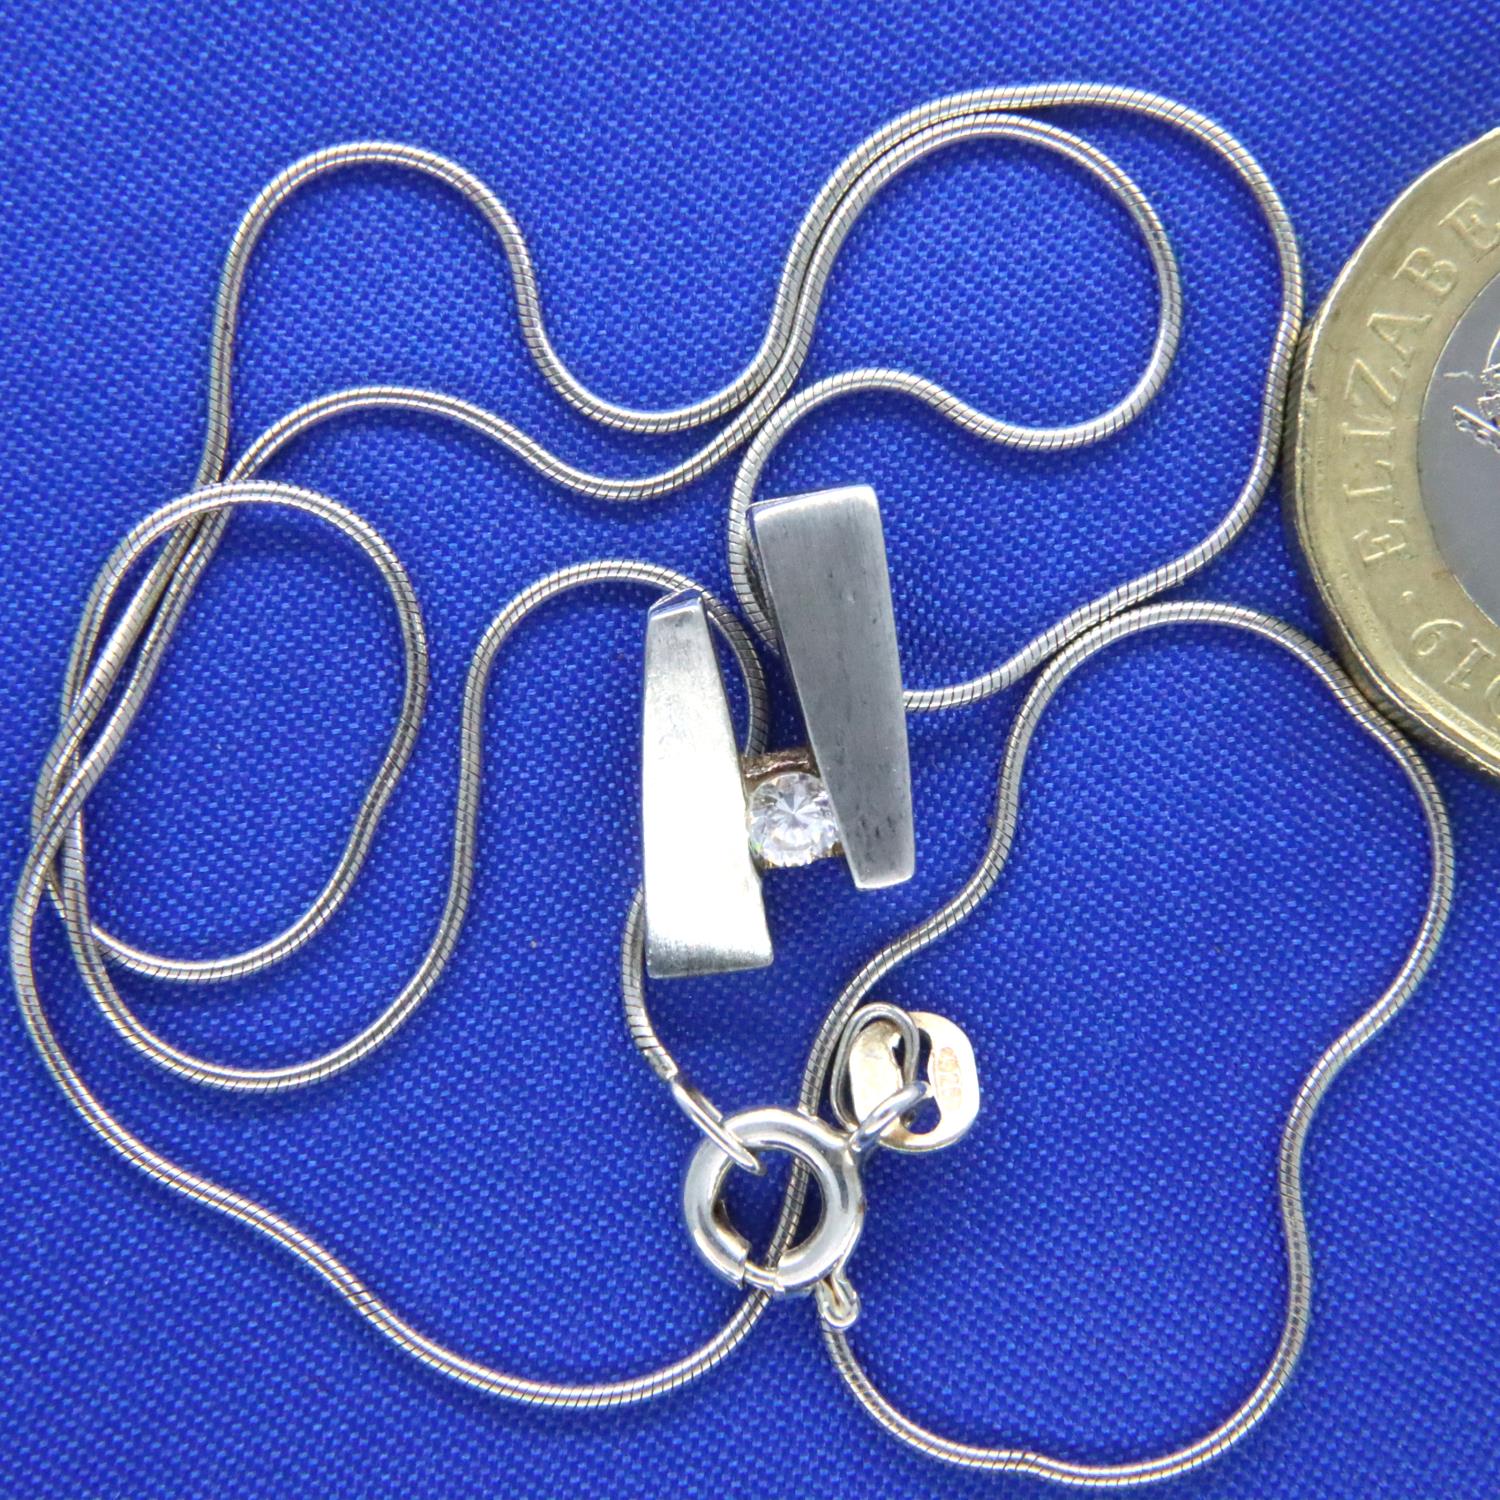 Sterling silver neck chain with a diamond set pendant, chain L: 38 cm, pendant D: 14 mm. P&P Group 1